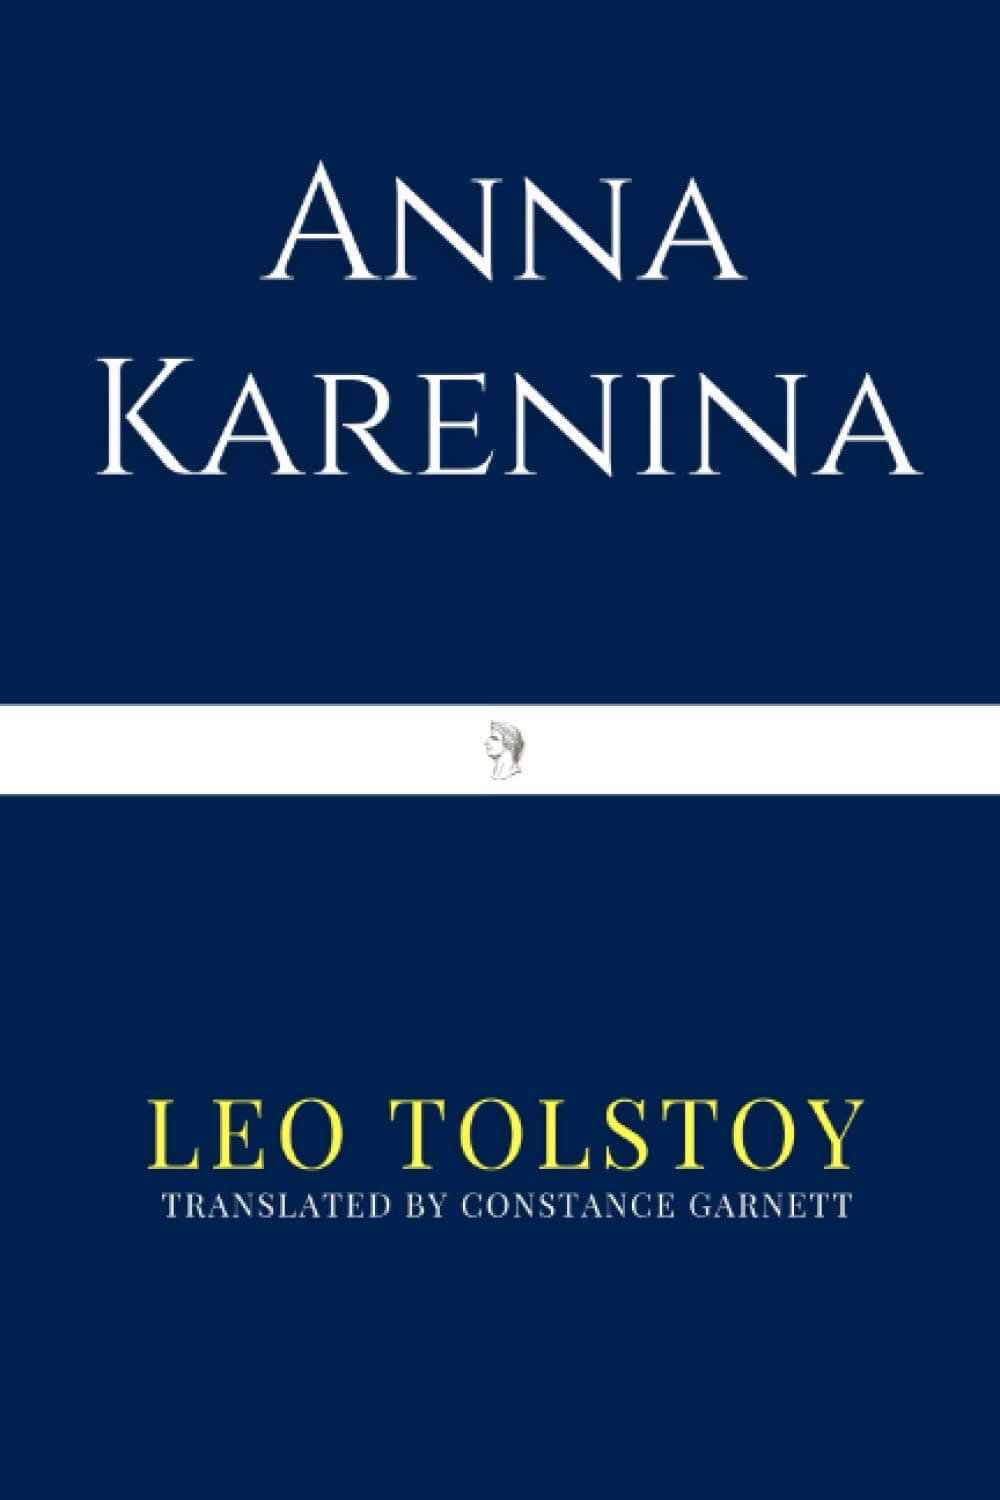 "Anna Karenina" by Leo Tolstoy